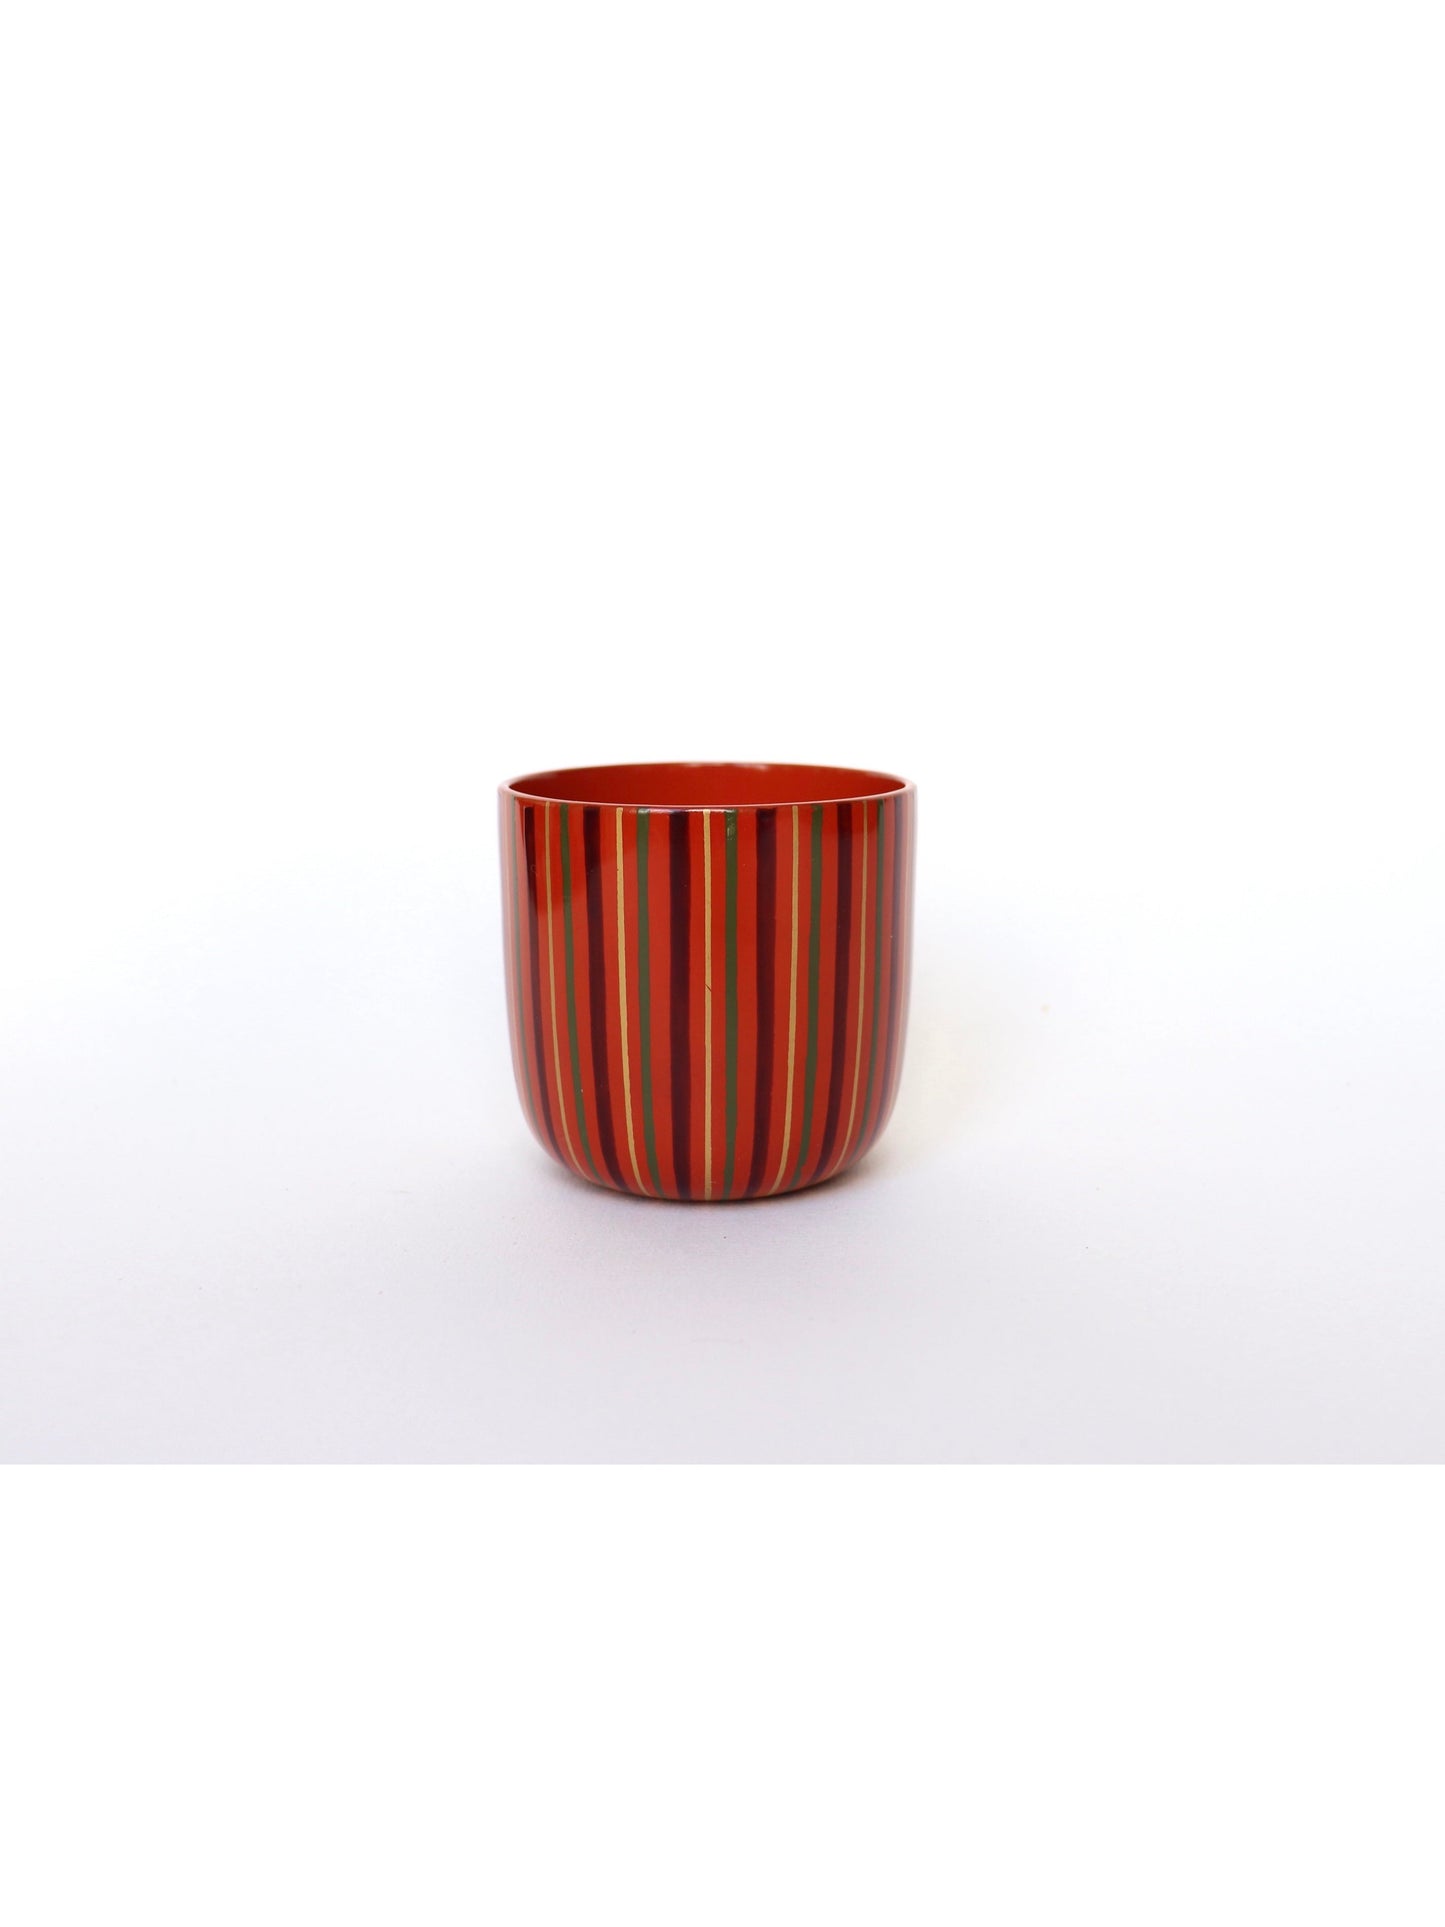 Wajima red lacquered wooden cup / "Mugiwara" makié